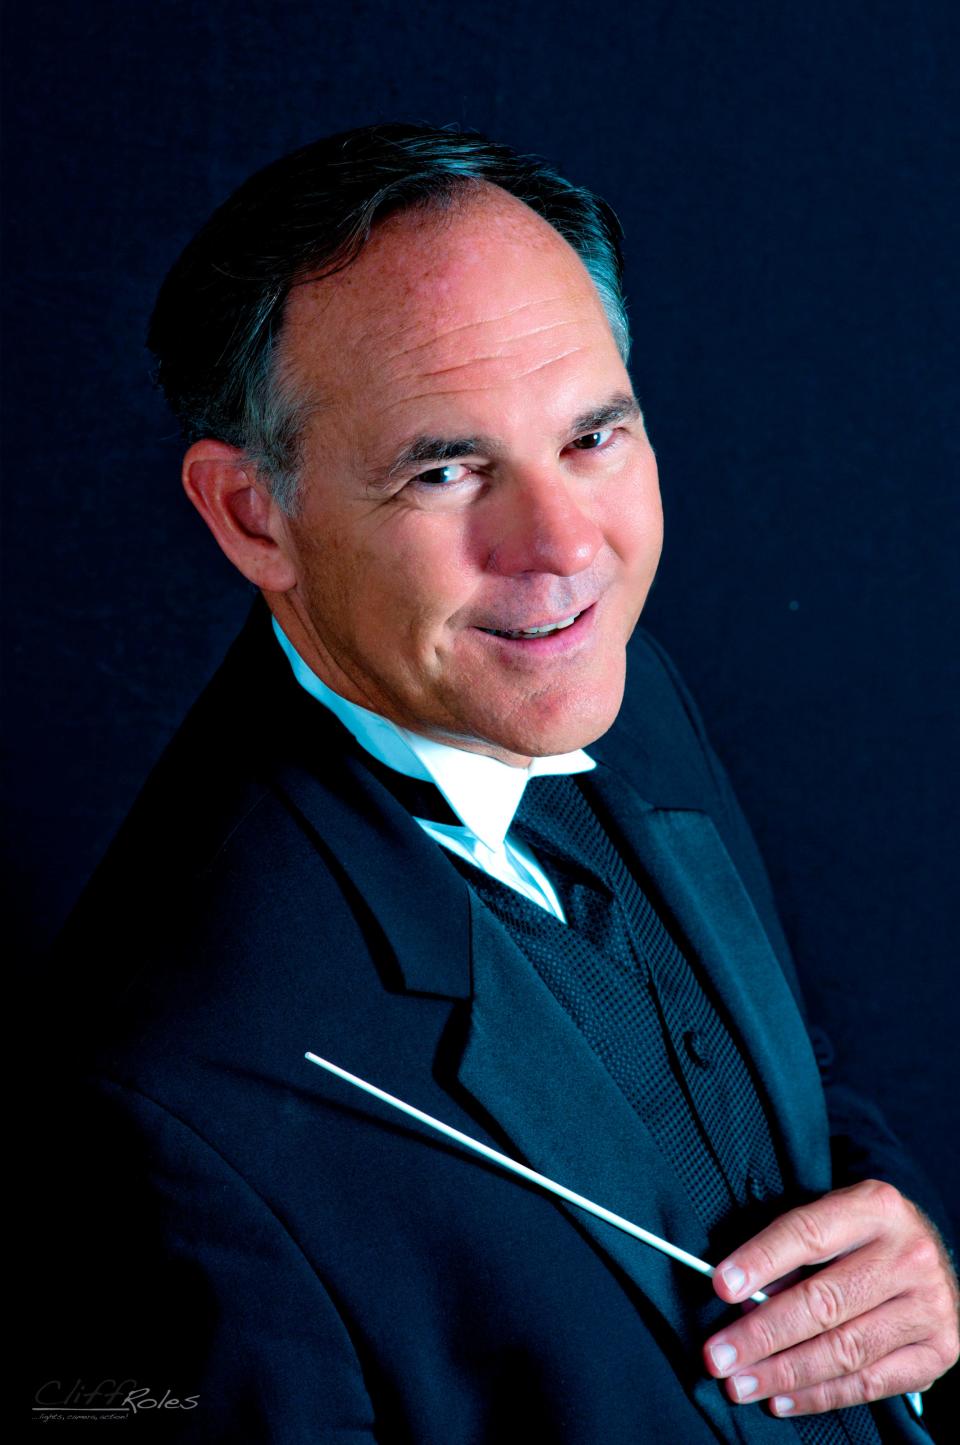 Joseph Holt is artistic director of Choral Artists of Sarasota.